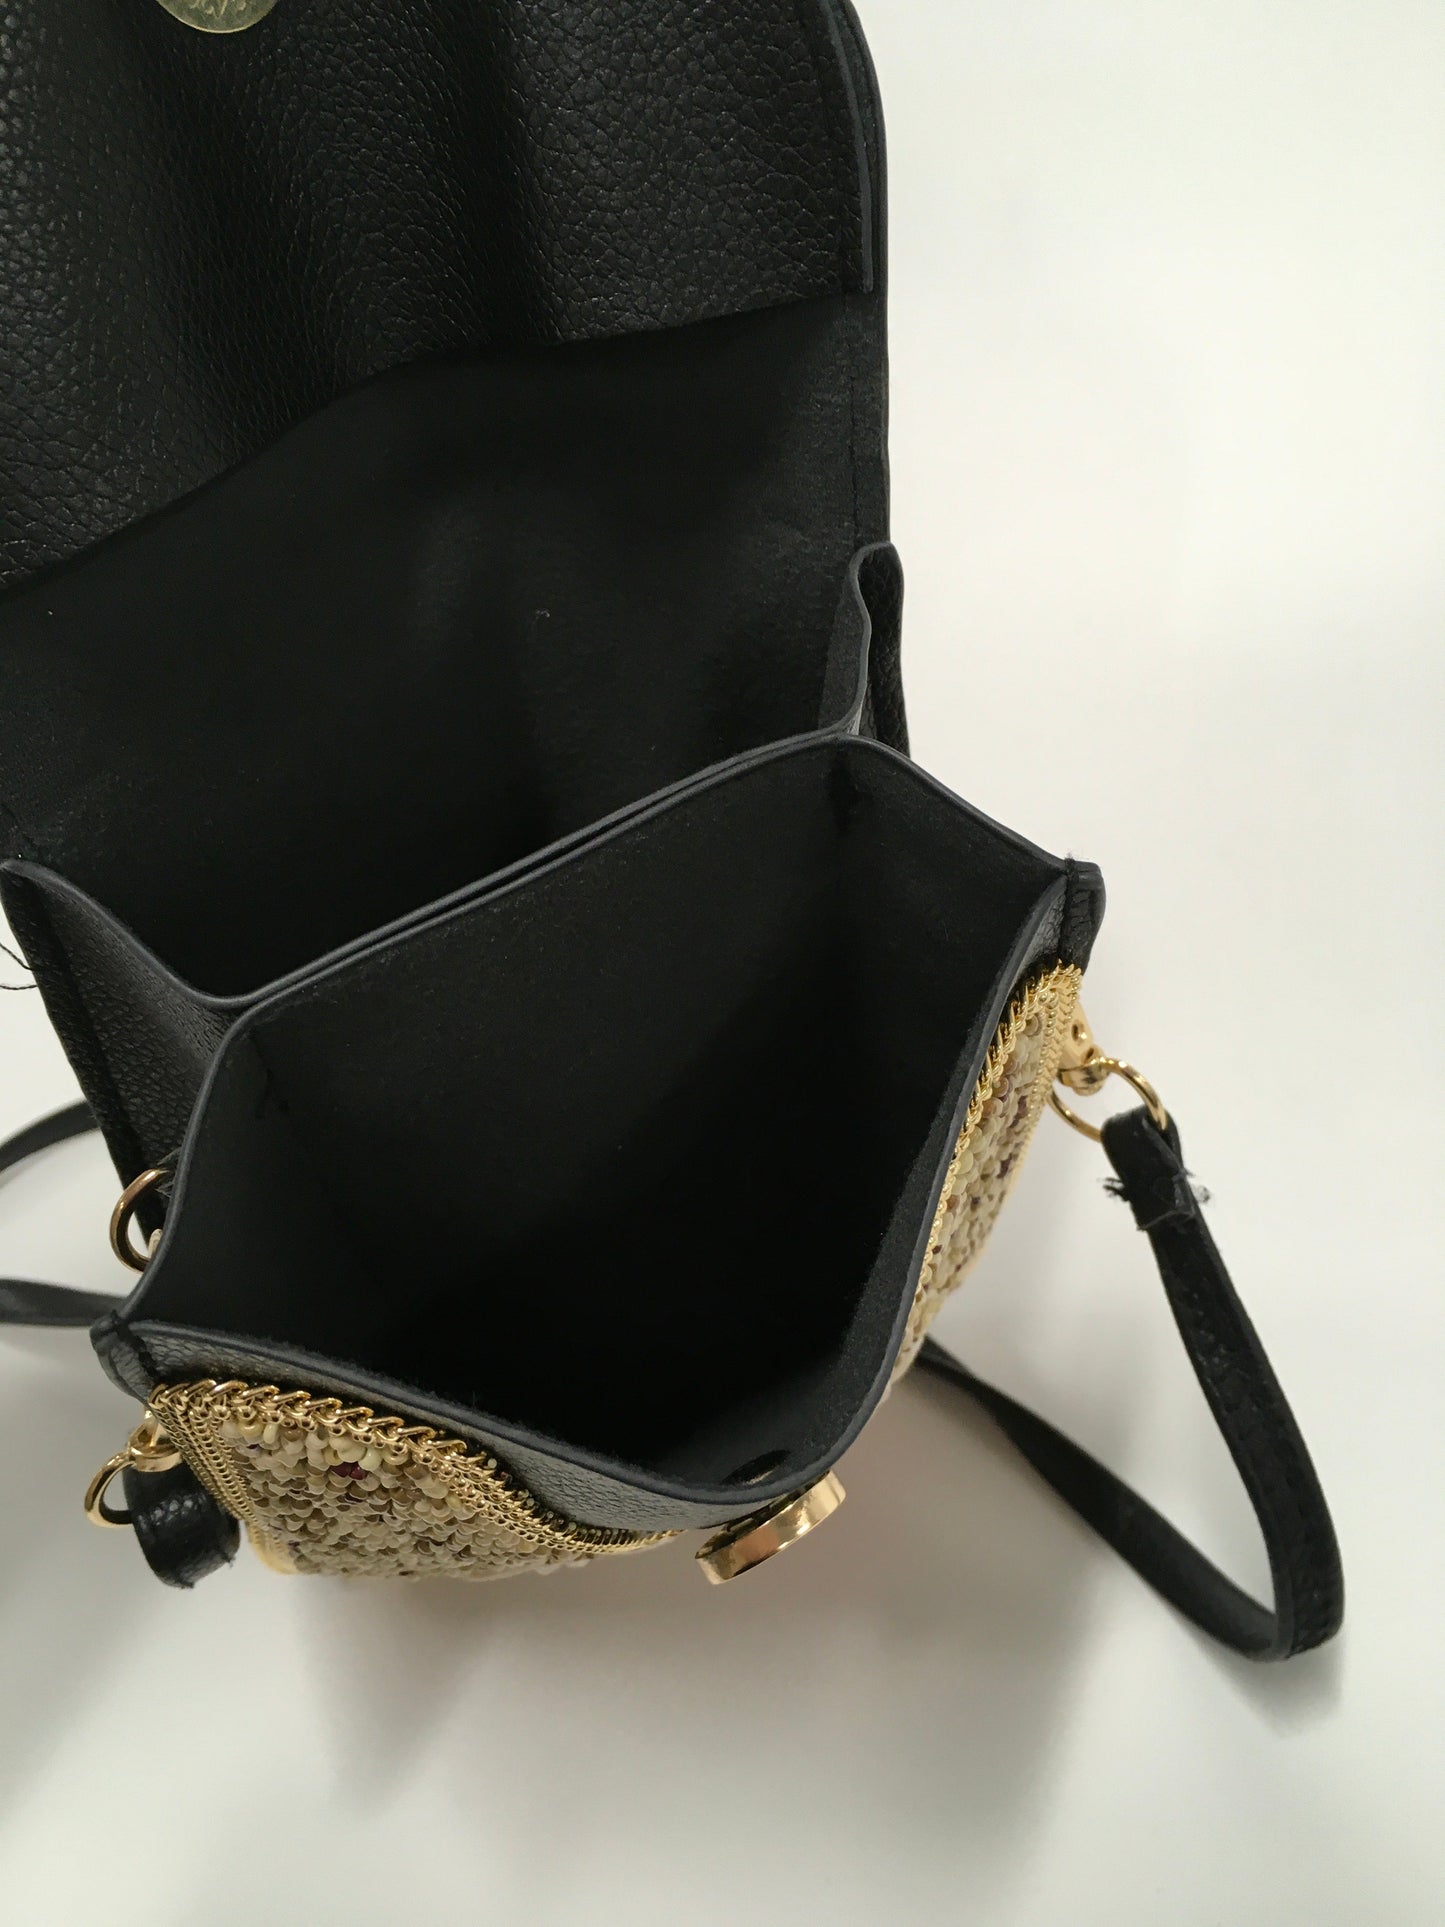 Handbag By Clothes Mentor  Size: Small